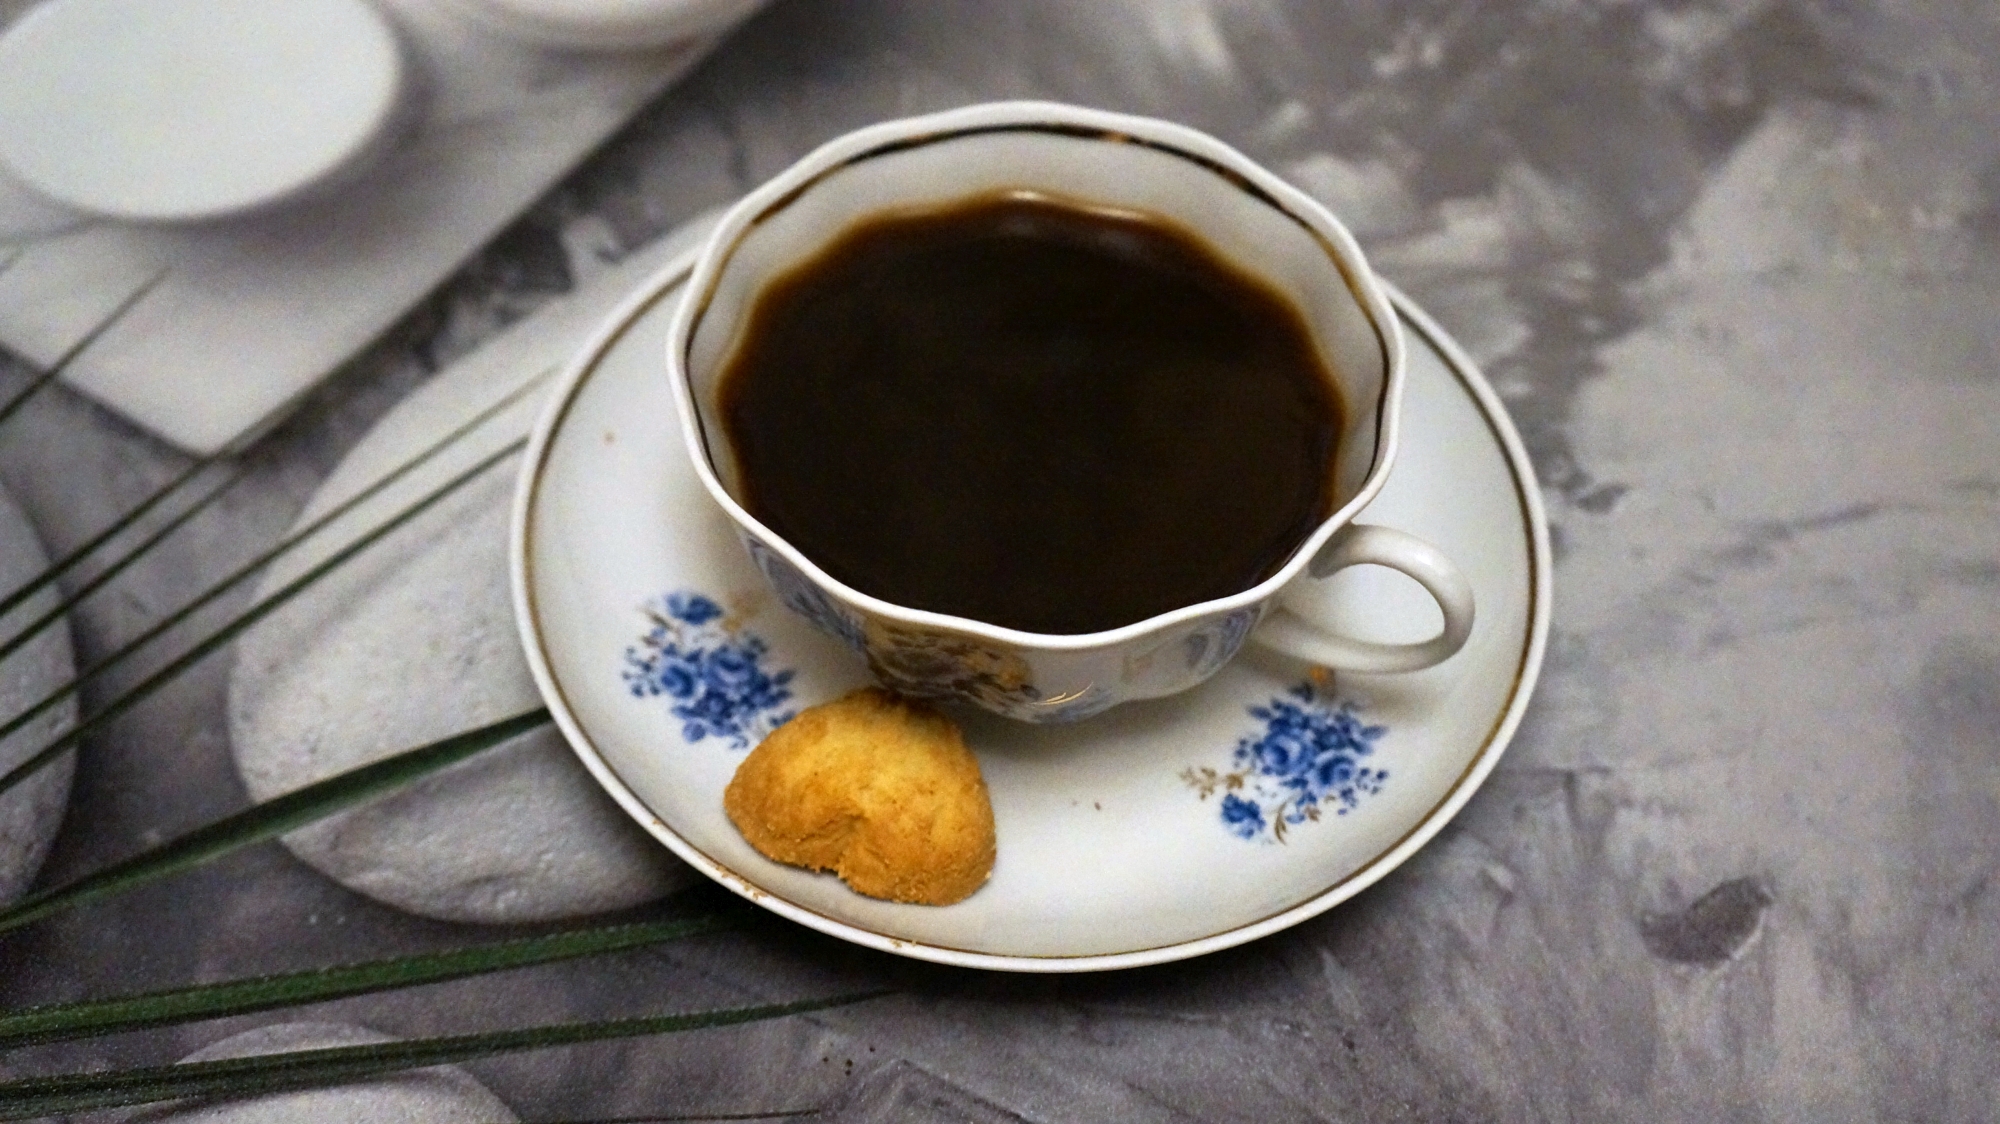 Кофе молотый Pelican Rouge Delice